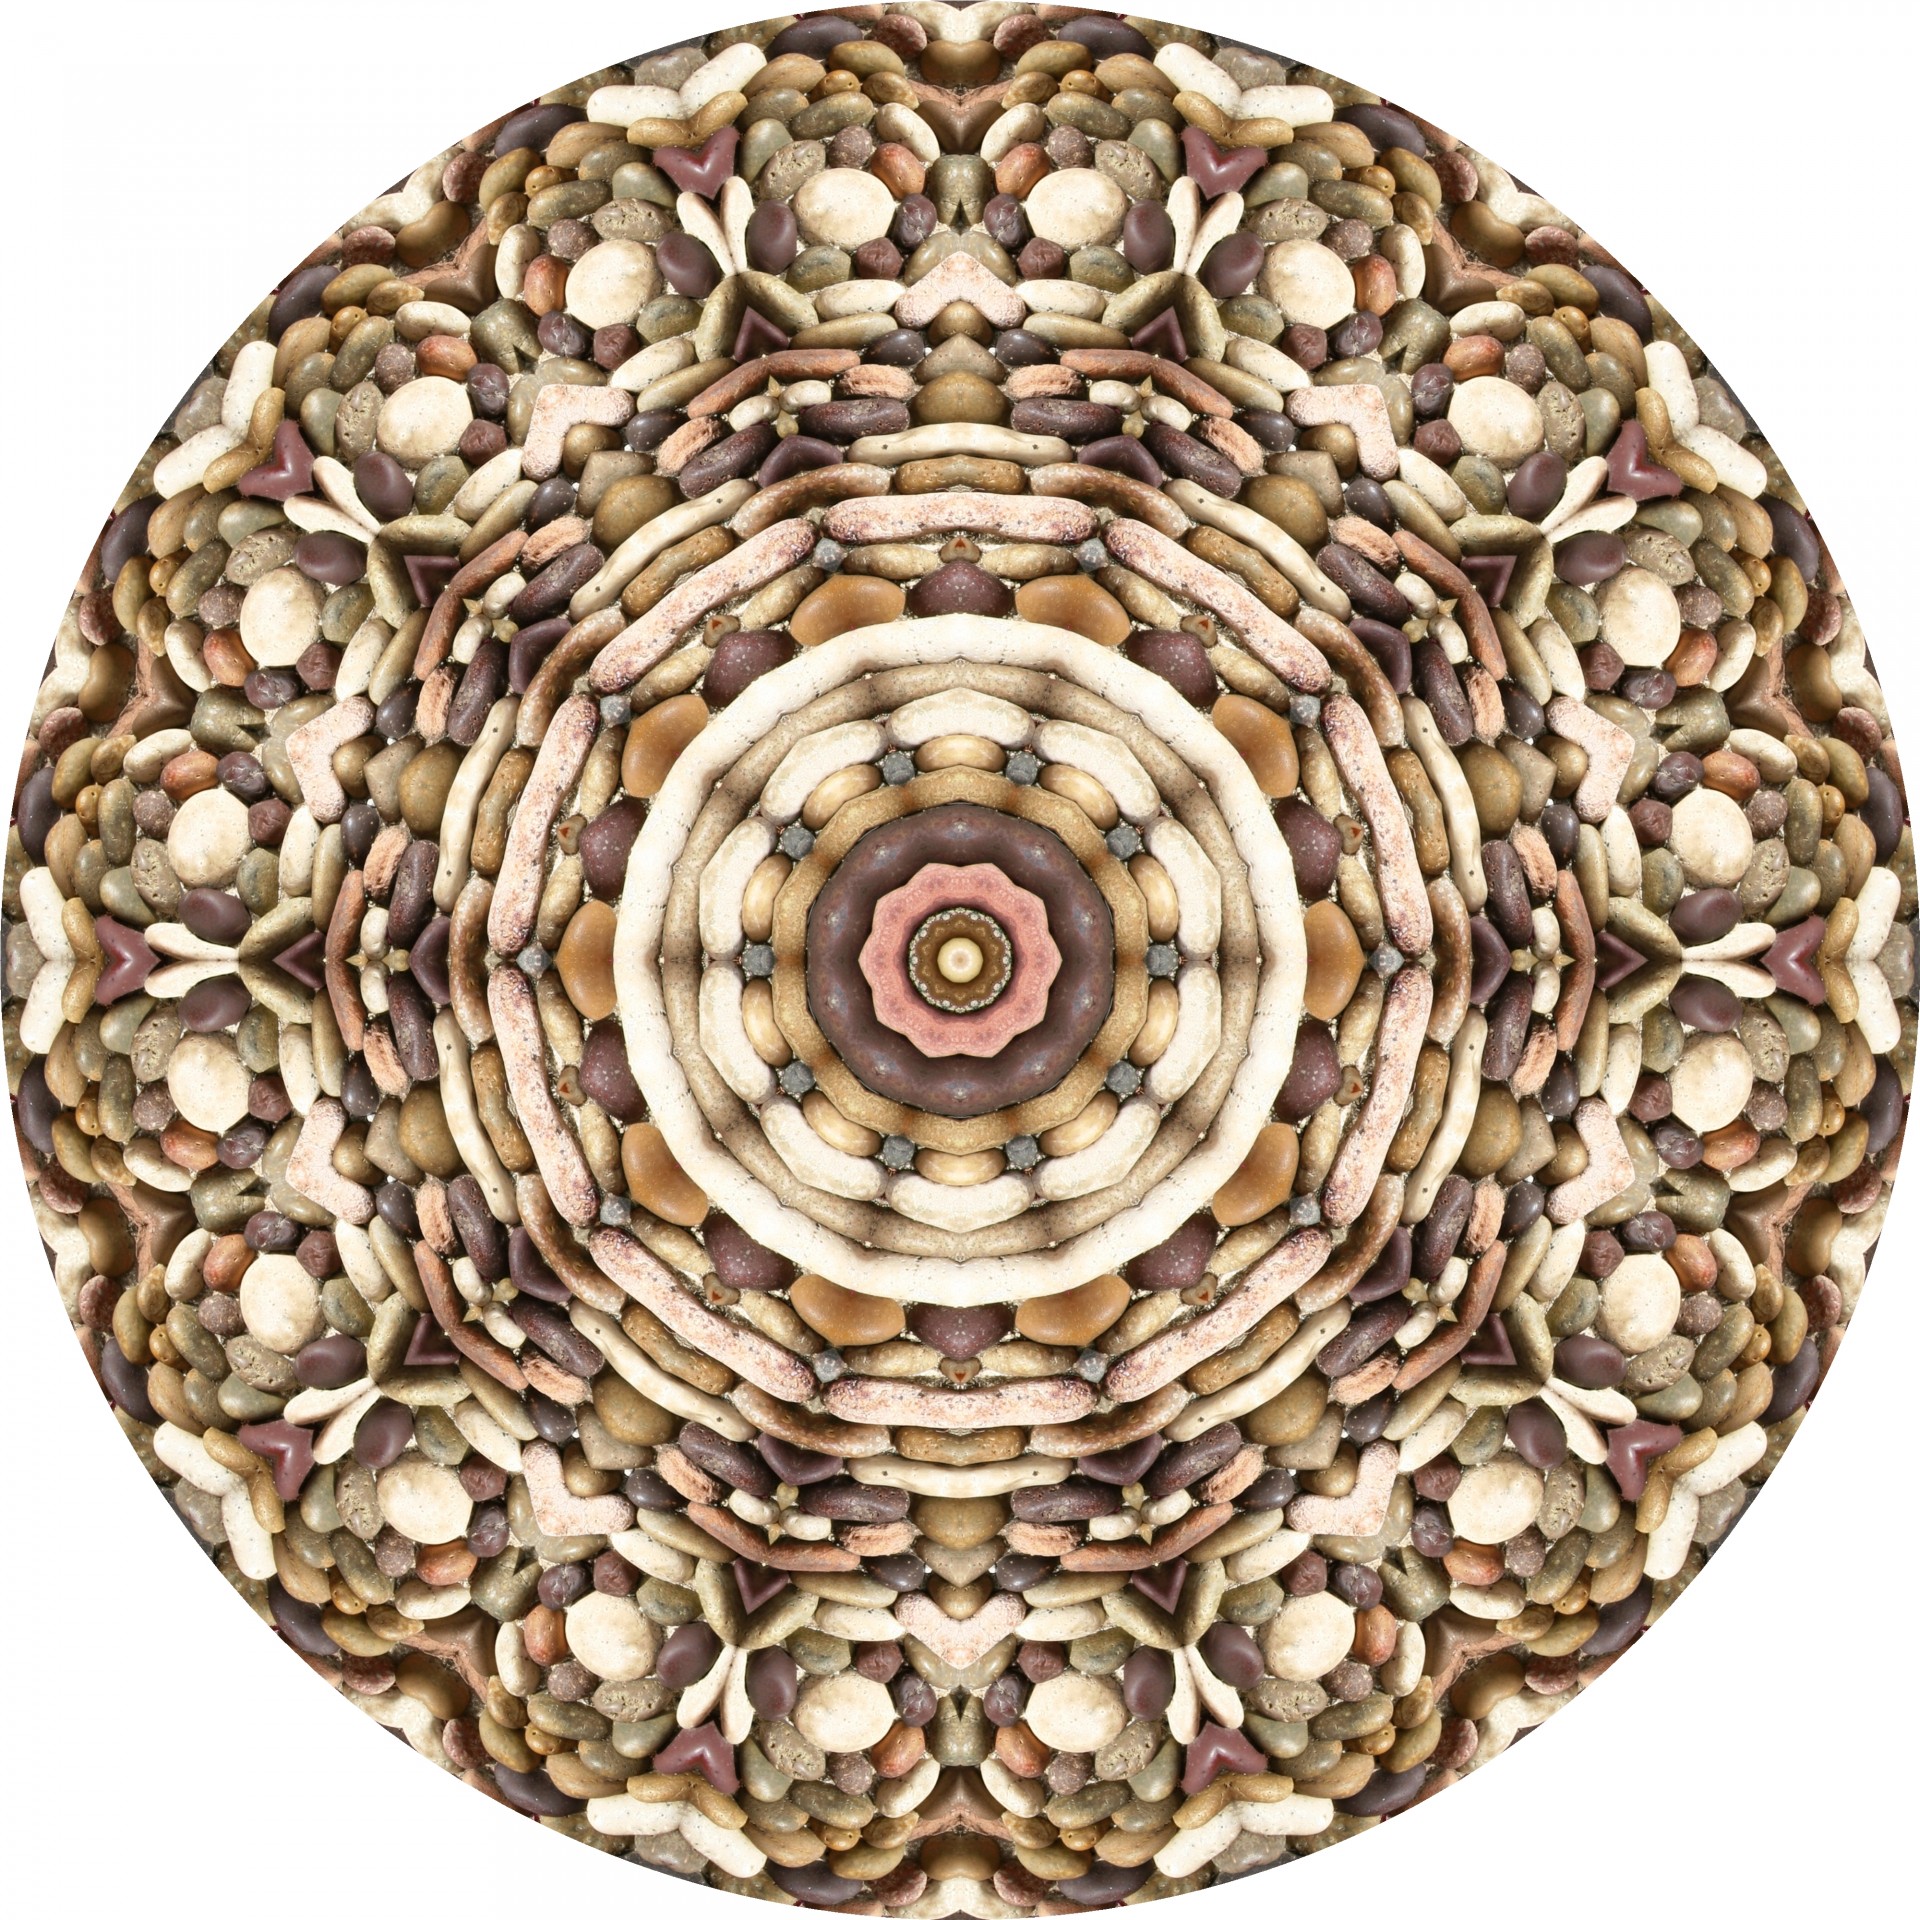 stones circle kaleidoscope free photo